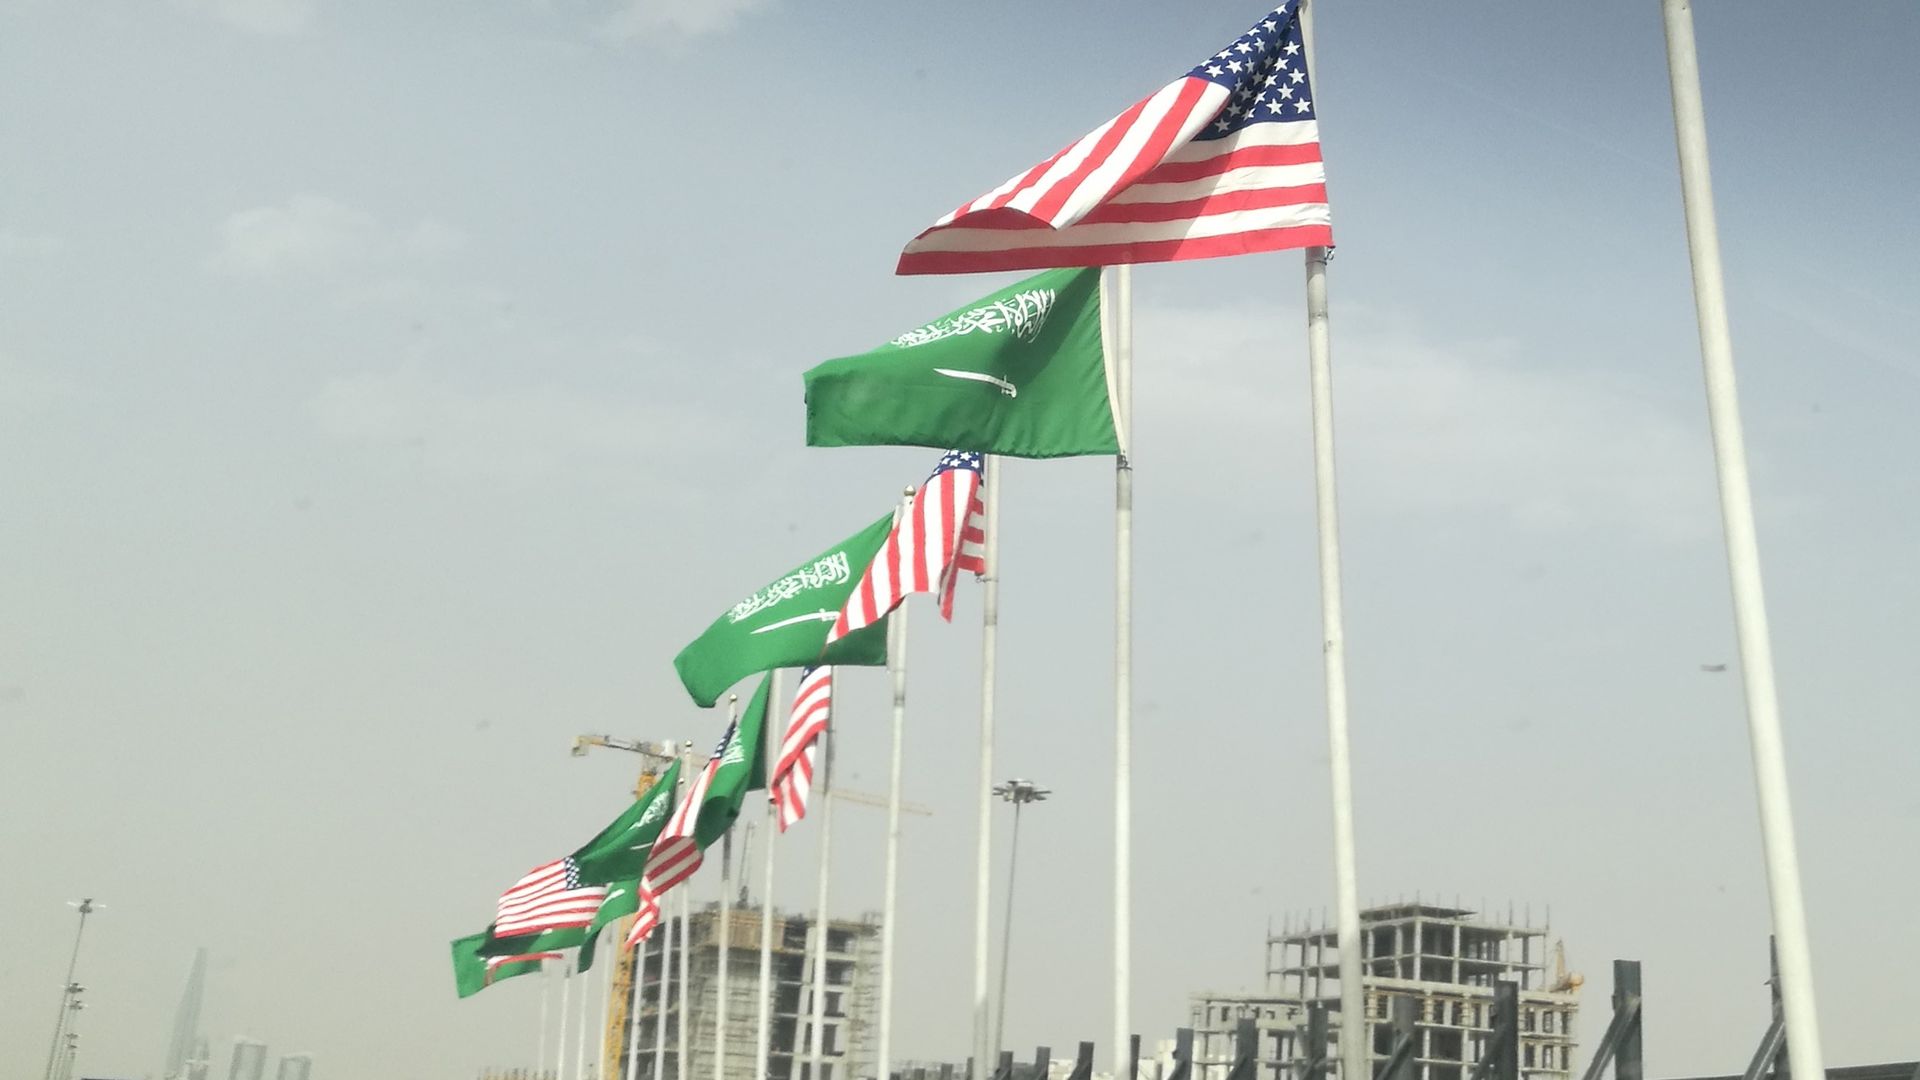 Flags of both United States and Saudi Arabia are raised ahead of U.S President Donald Trump's visit to Saudi Arabia.